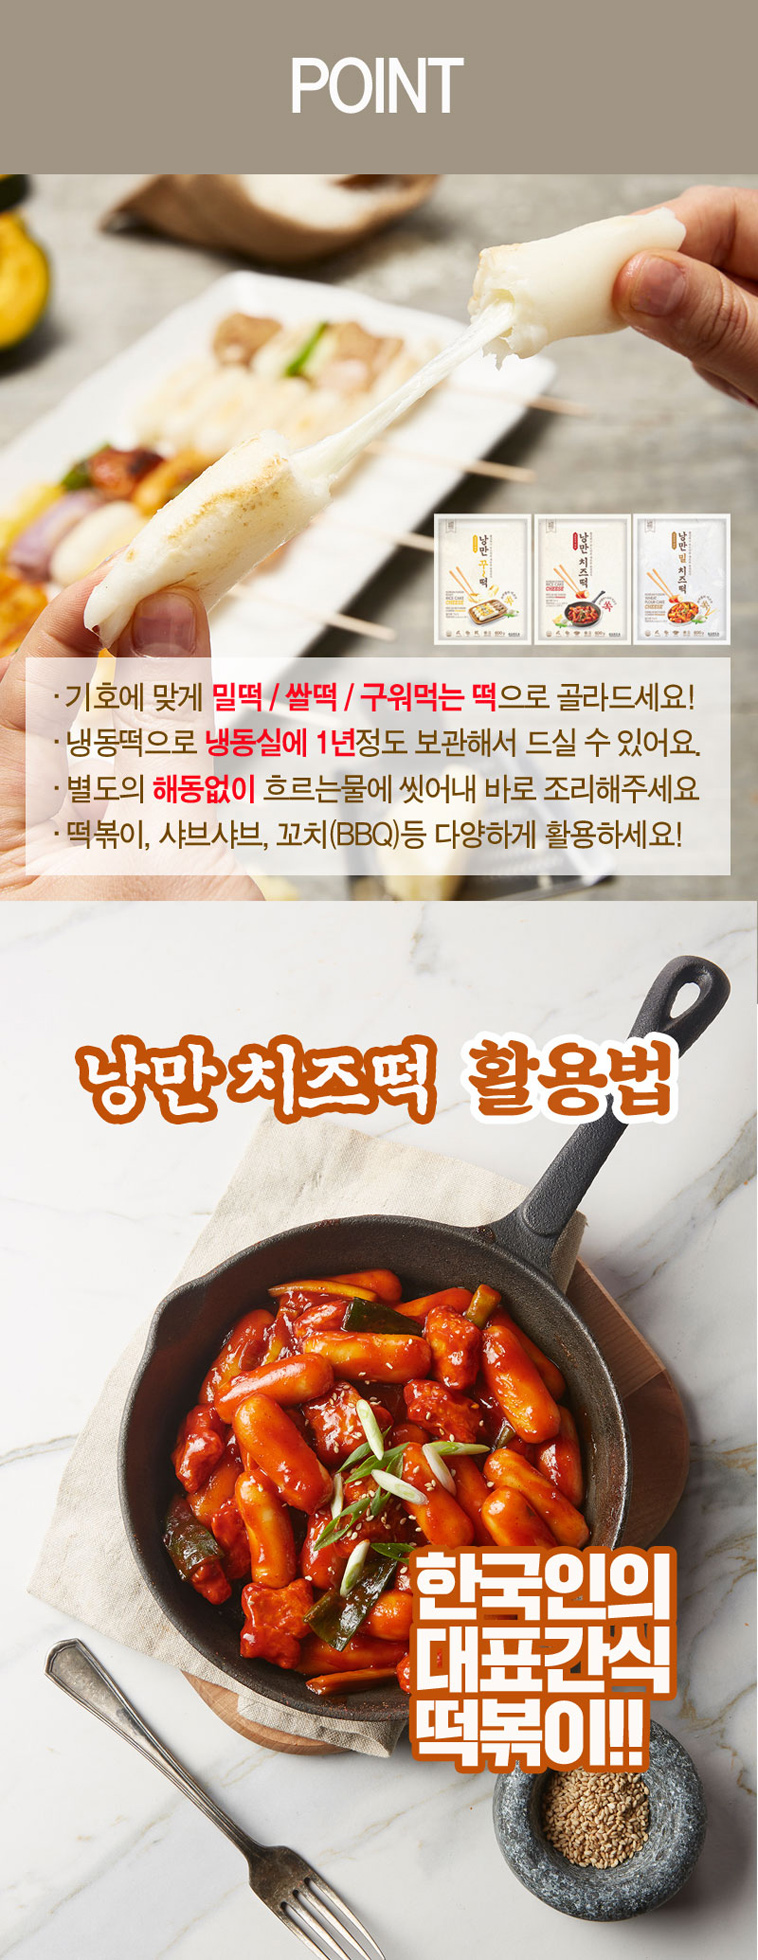 NangMan Brothers Korean Fusion Rice Cake with Cheese 21.16oz(600g), 낭만 브라더 낭만 치즈떡 21.16oz(600g)